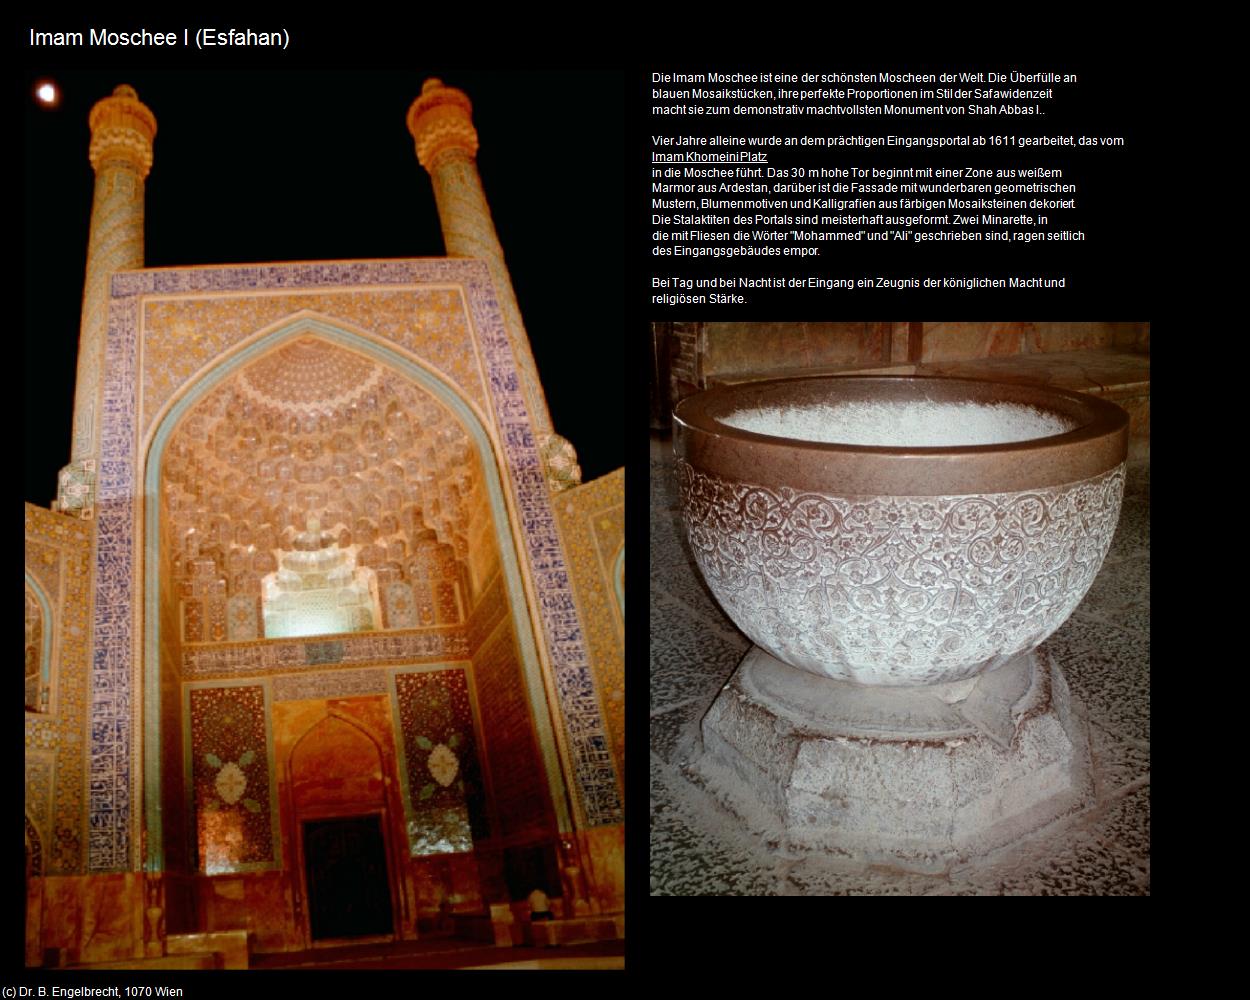 Imam Moschee I (Esfahan) in Iran(c)B.Engelbrecht